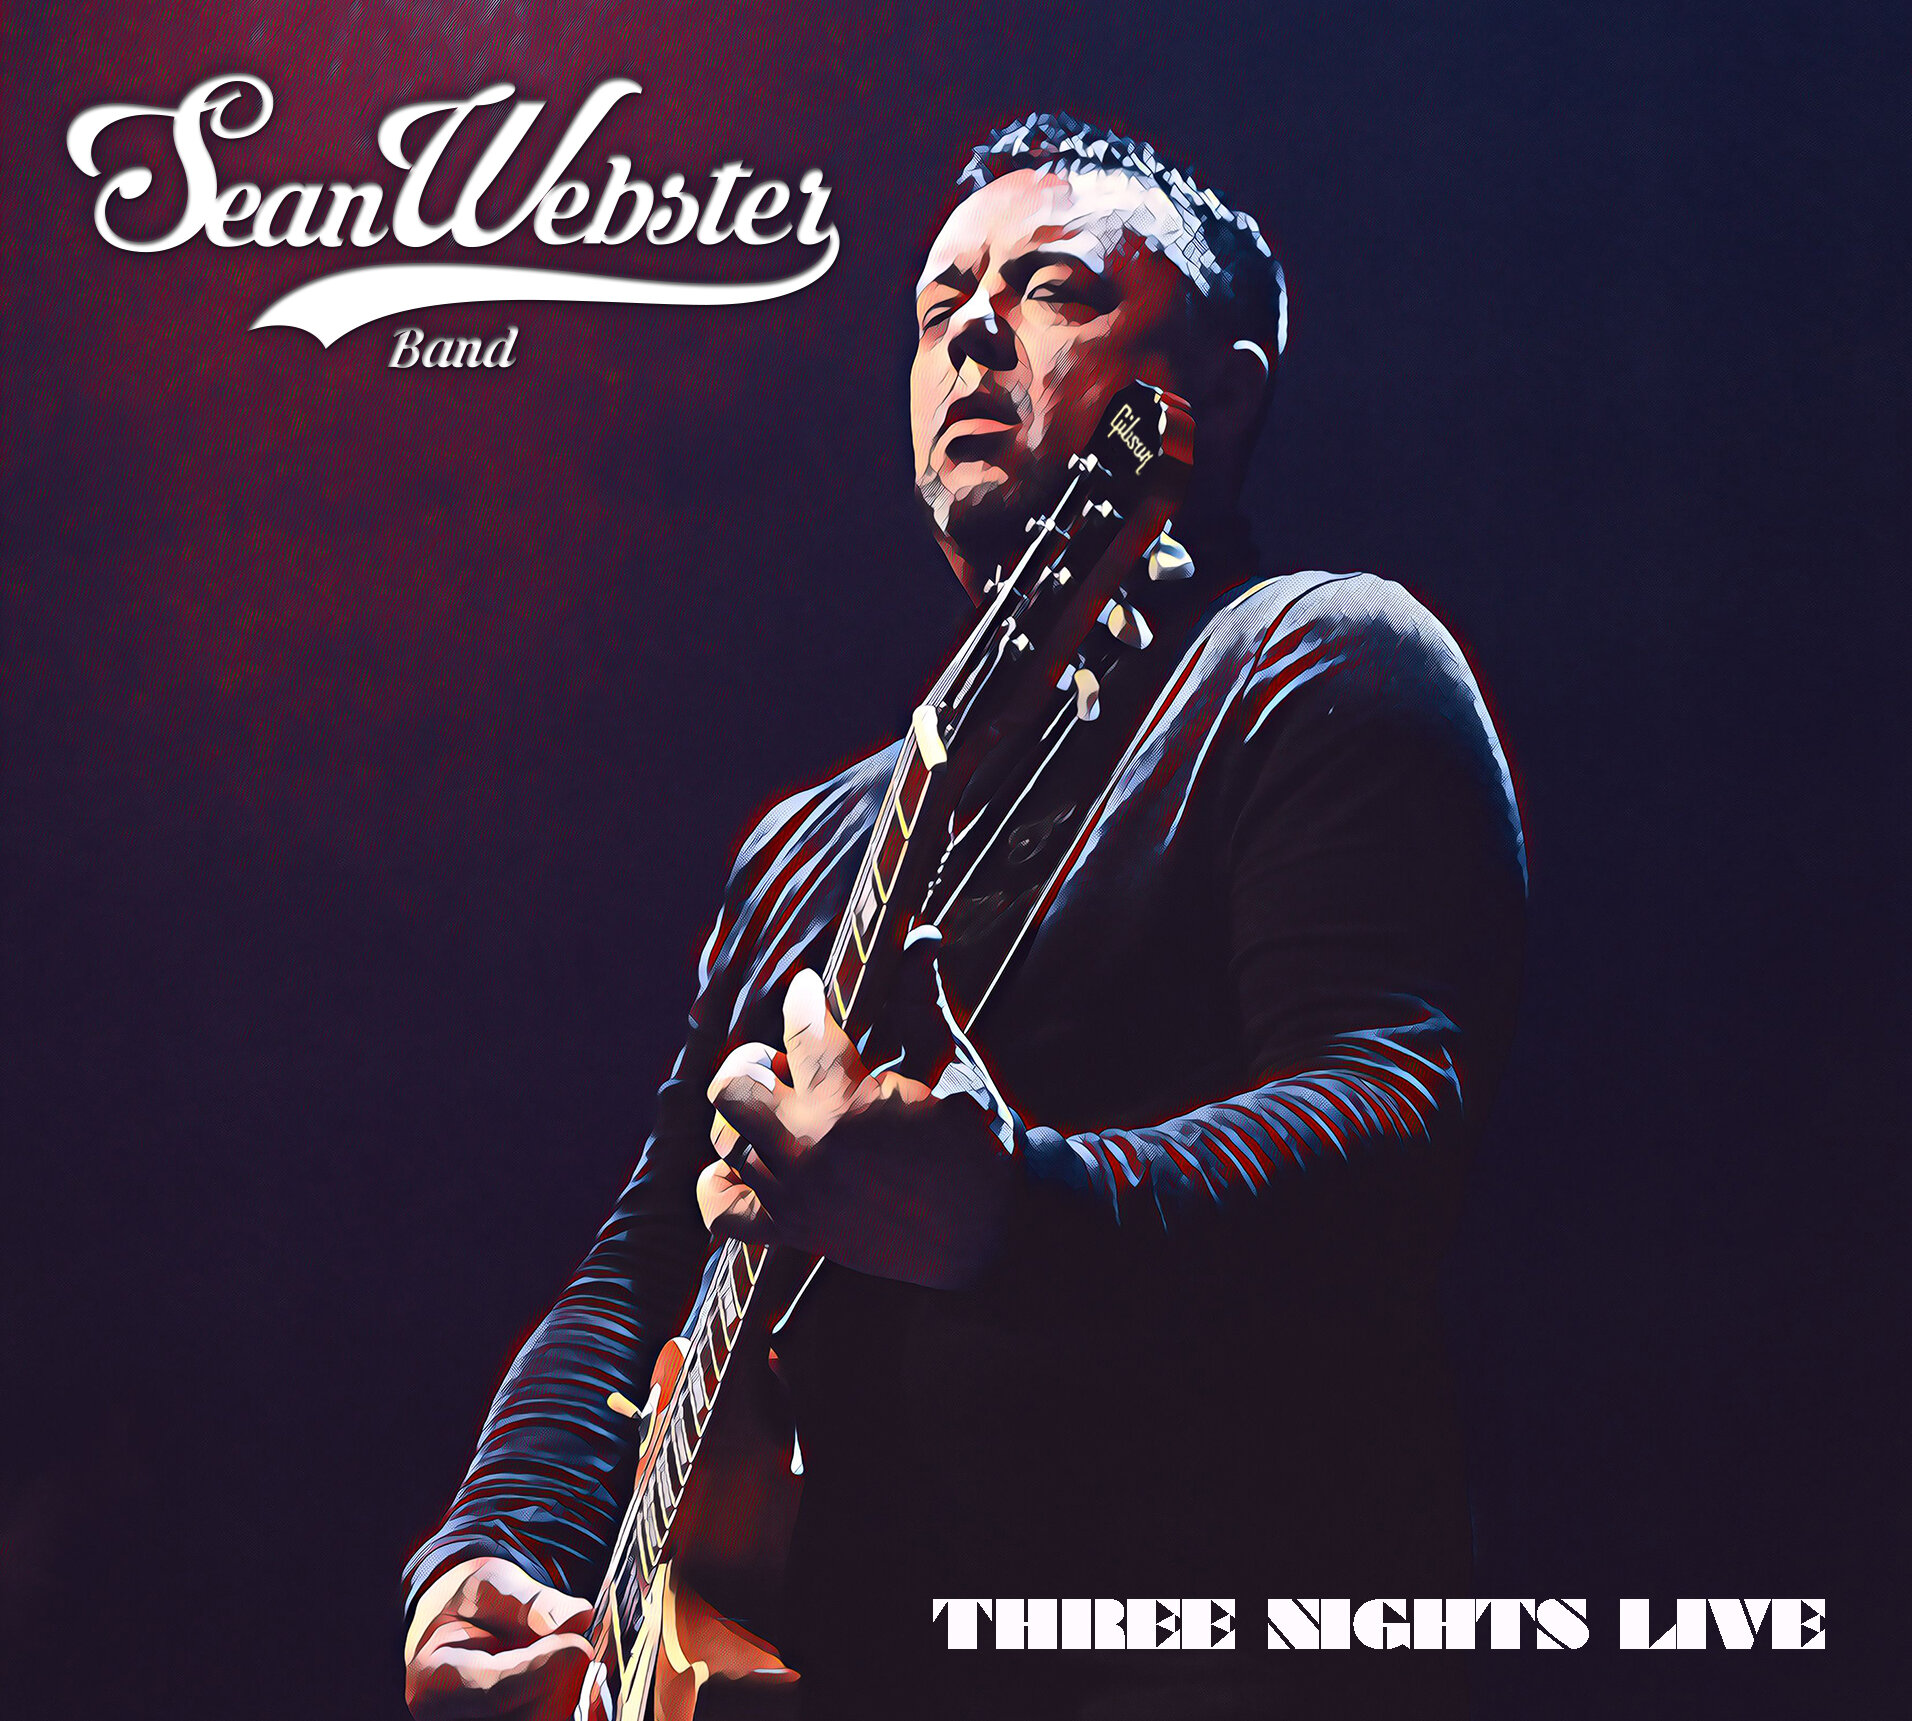 Sean Webster Band (UK) – Three Nights Live